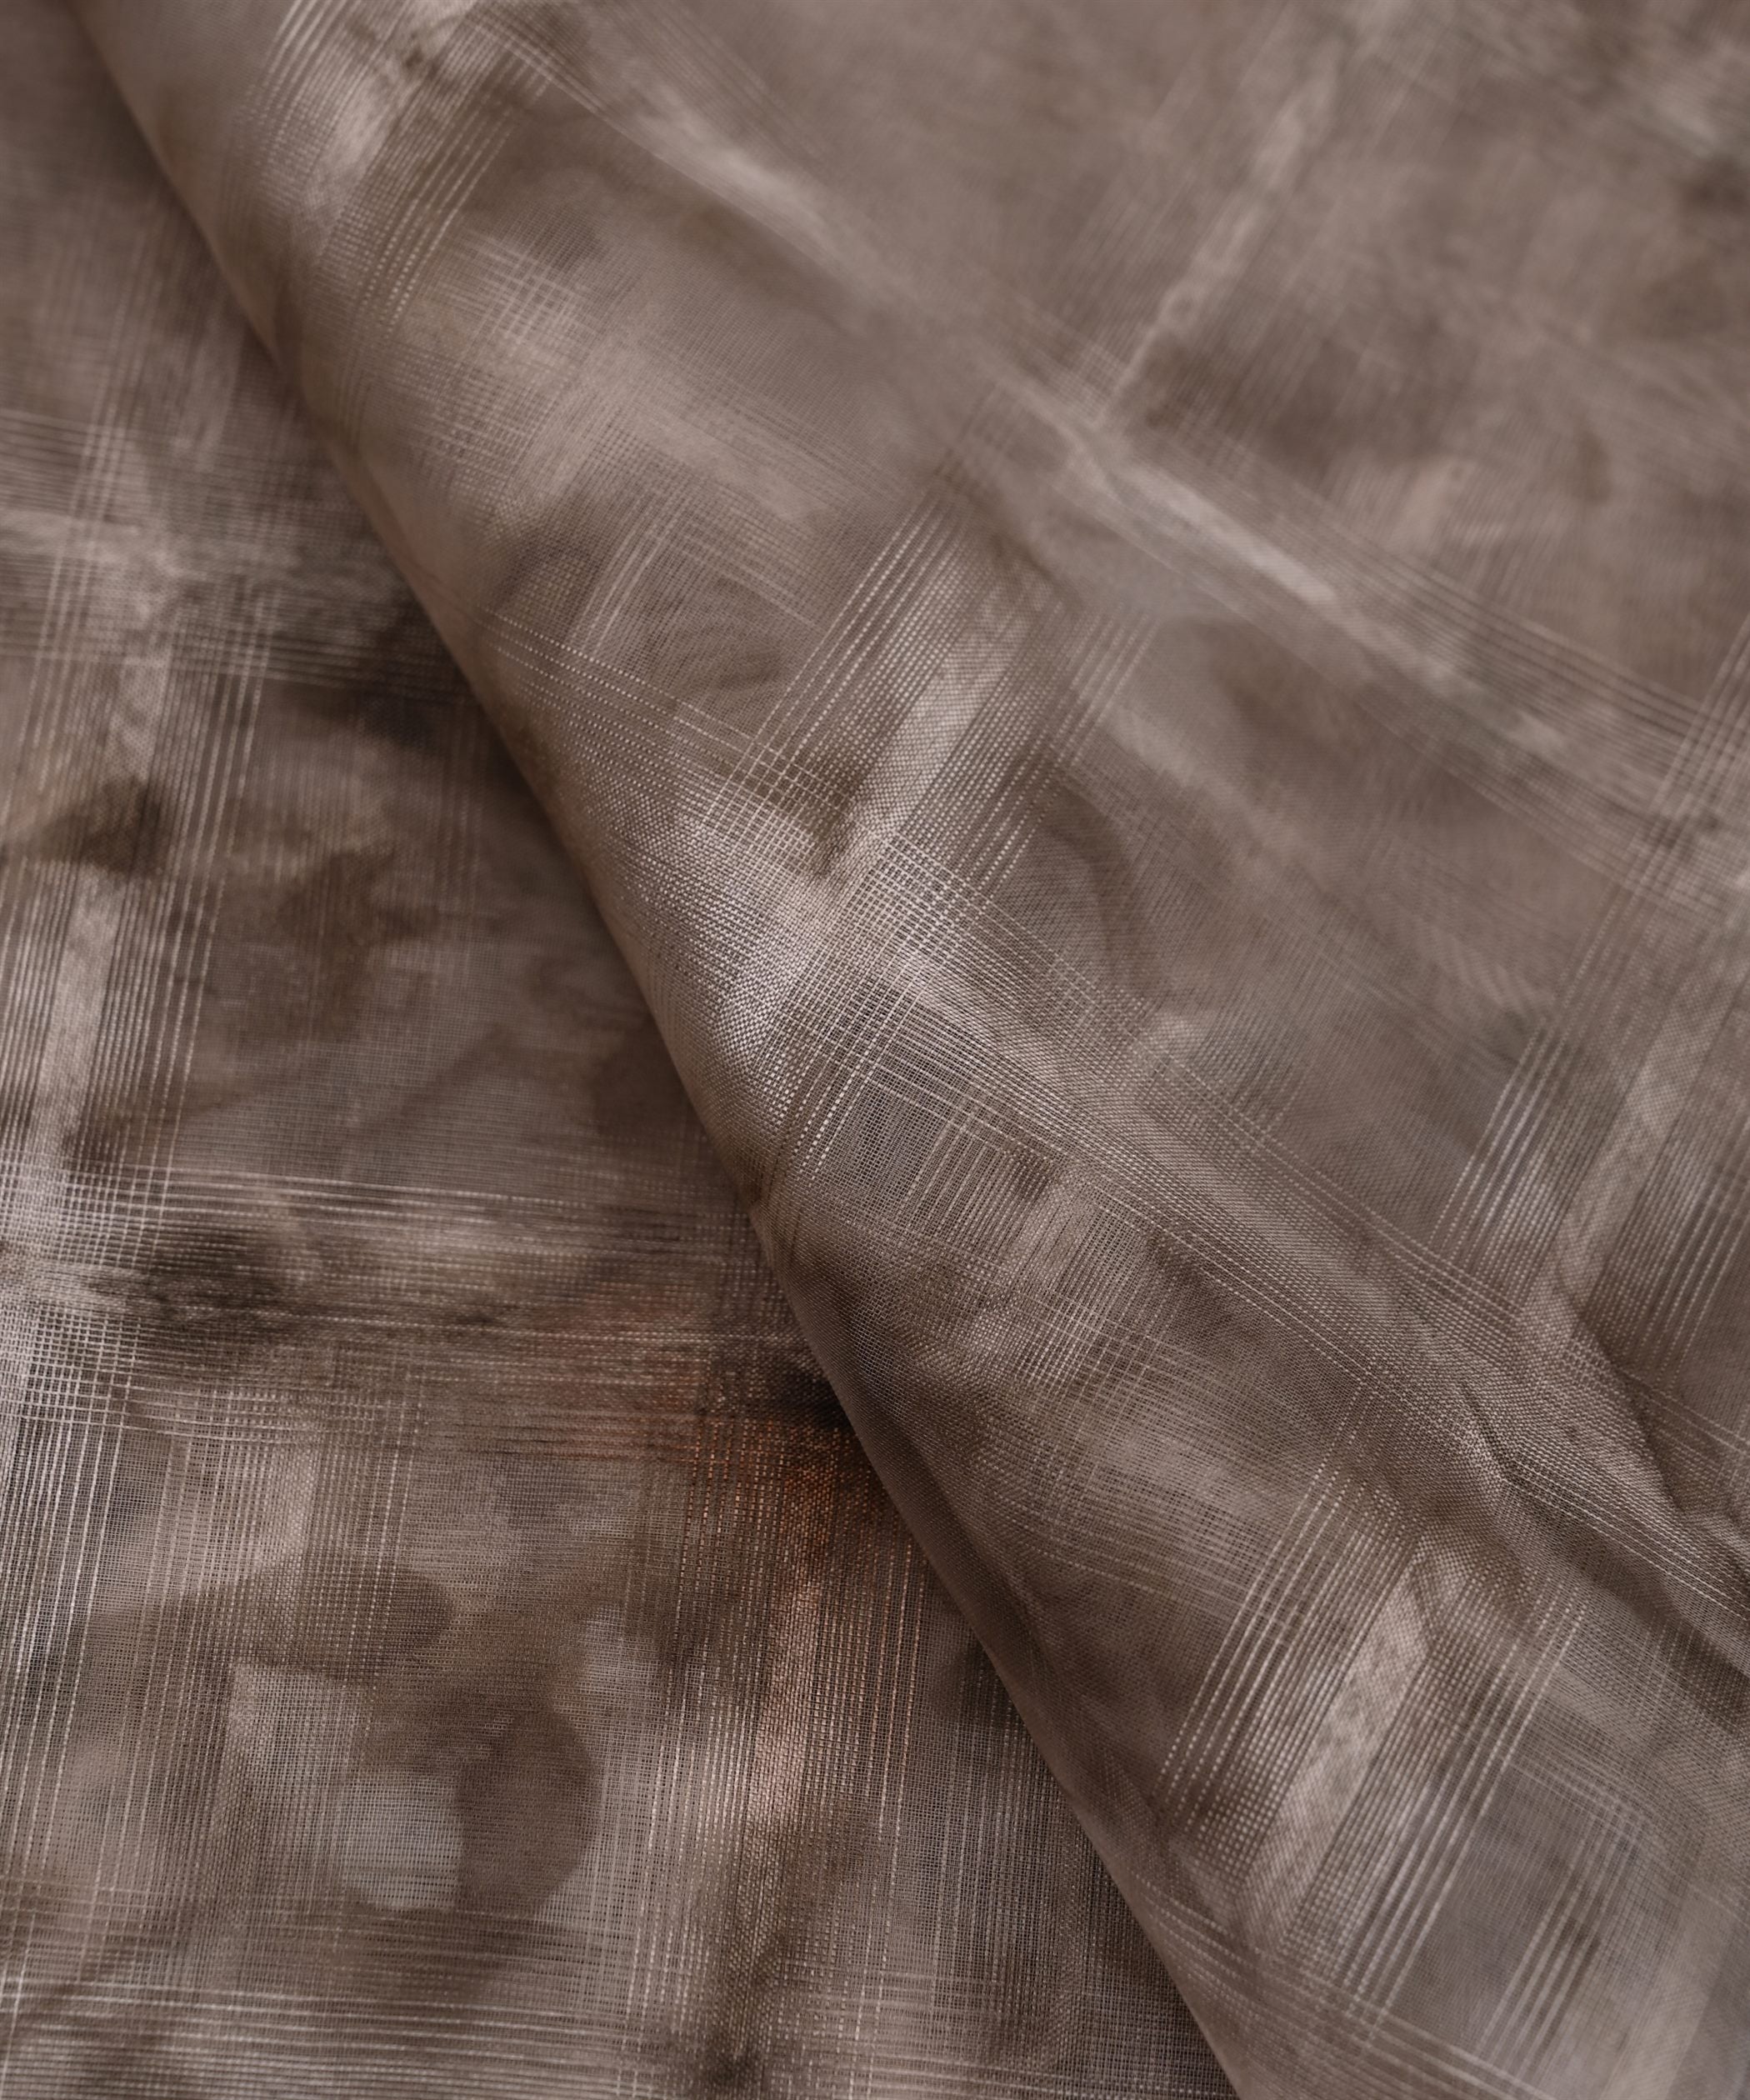 Grey Shibori Organza Fabric with Checks